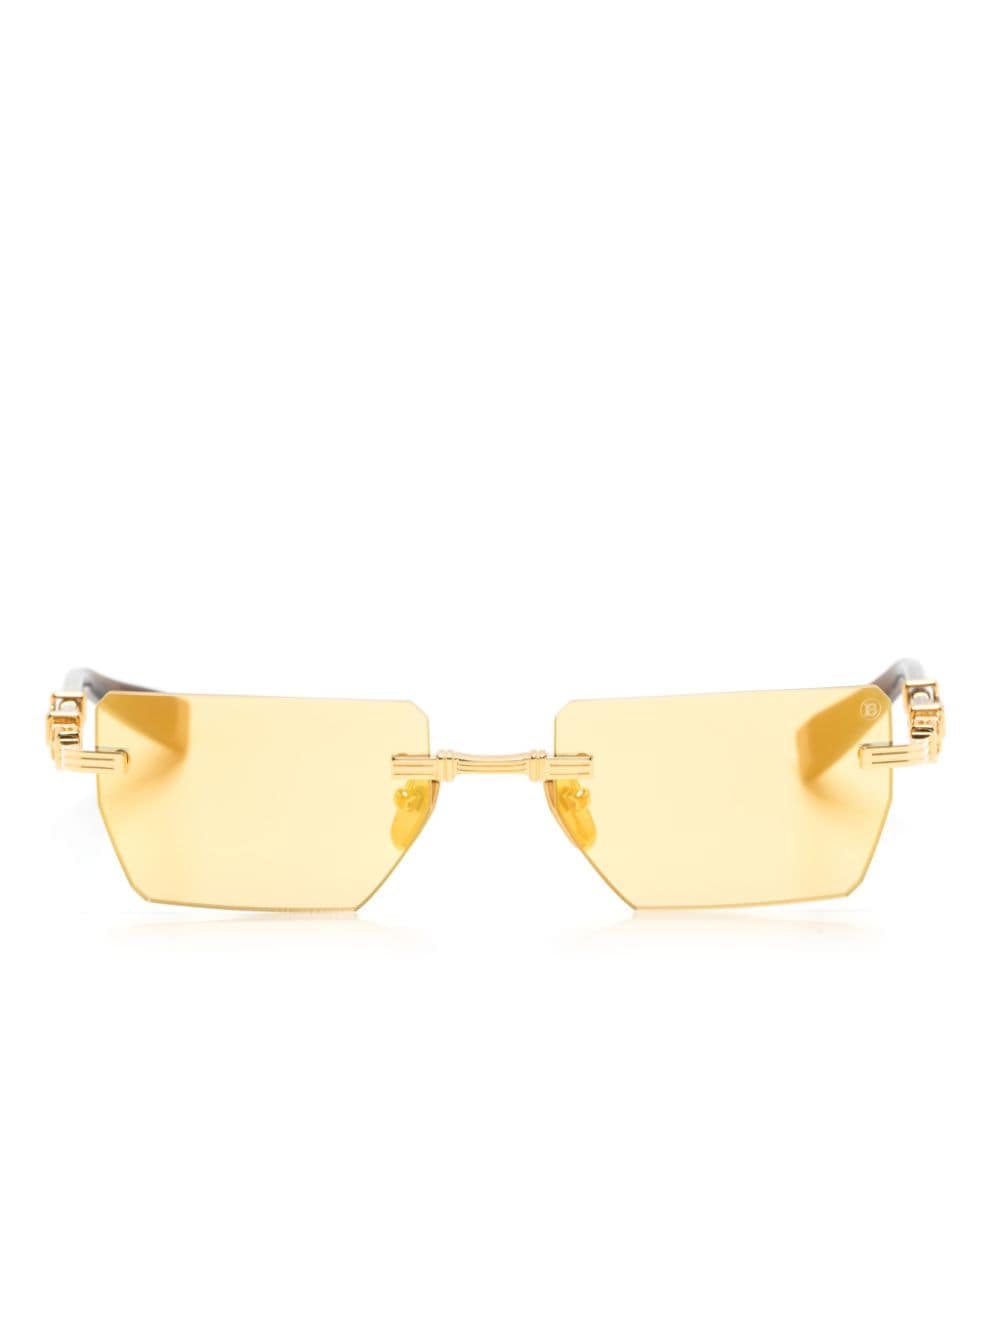 Pierre geometric-frame sunglasses